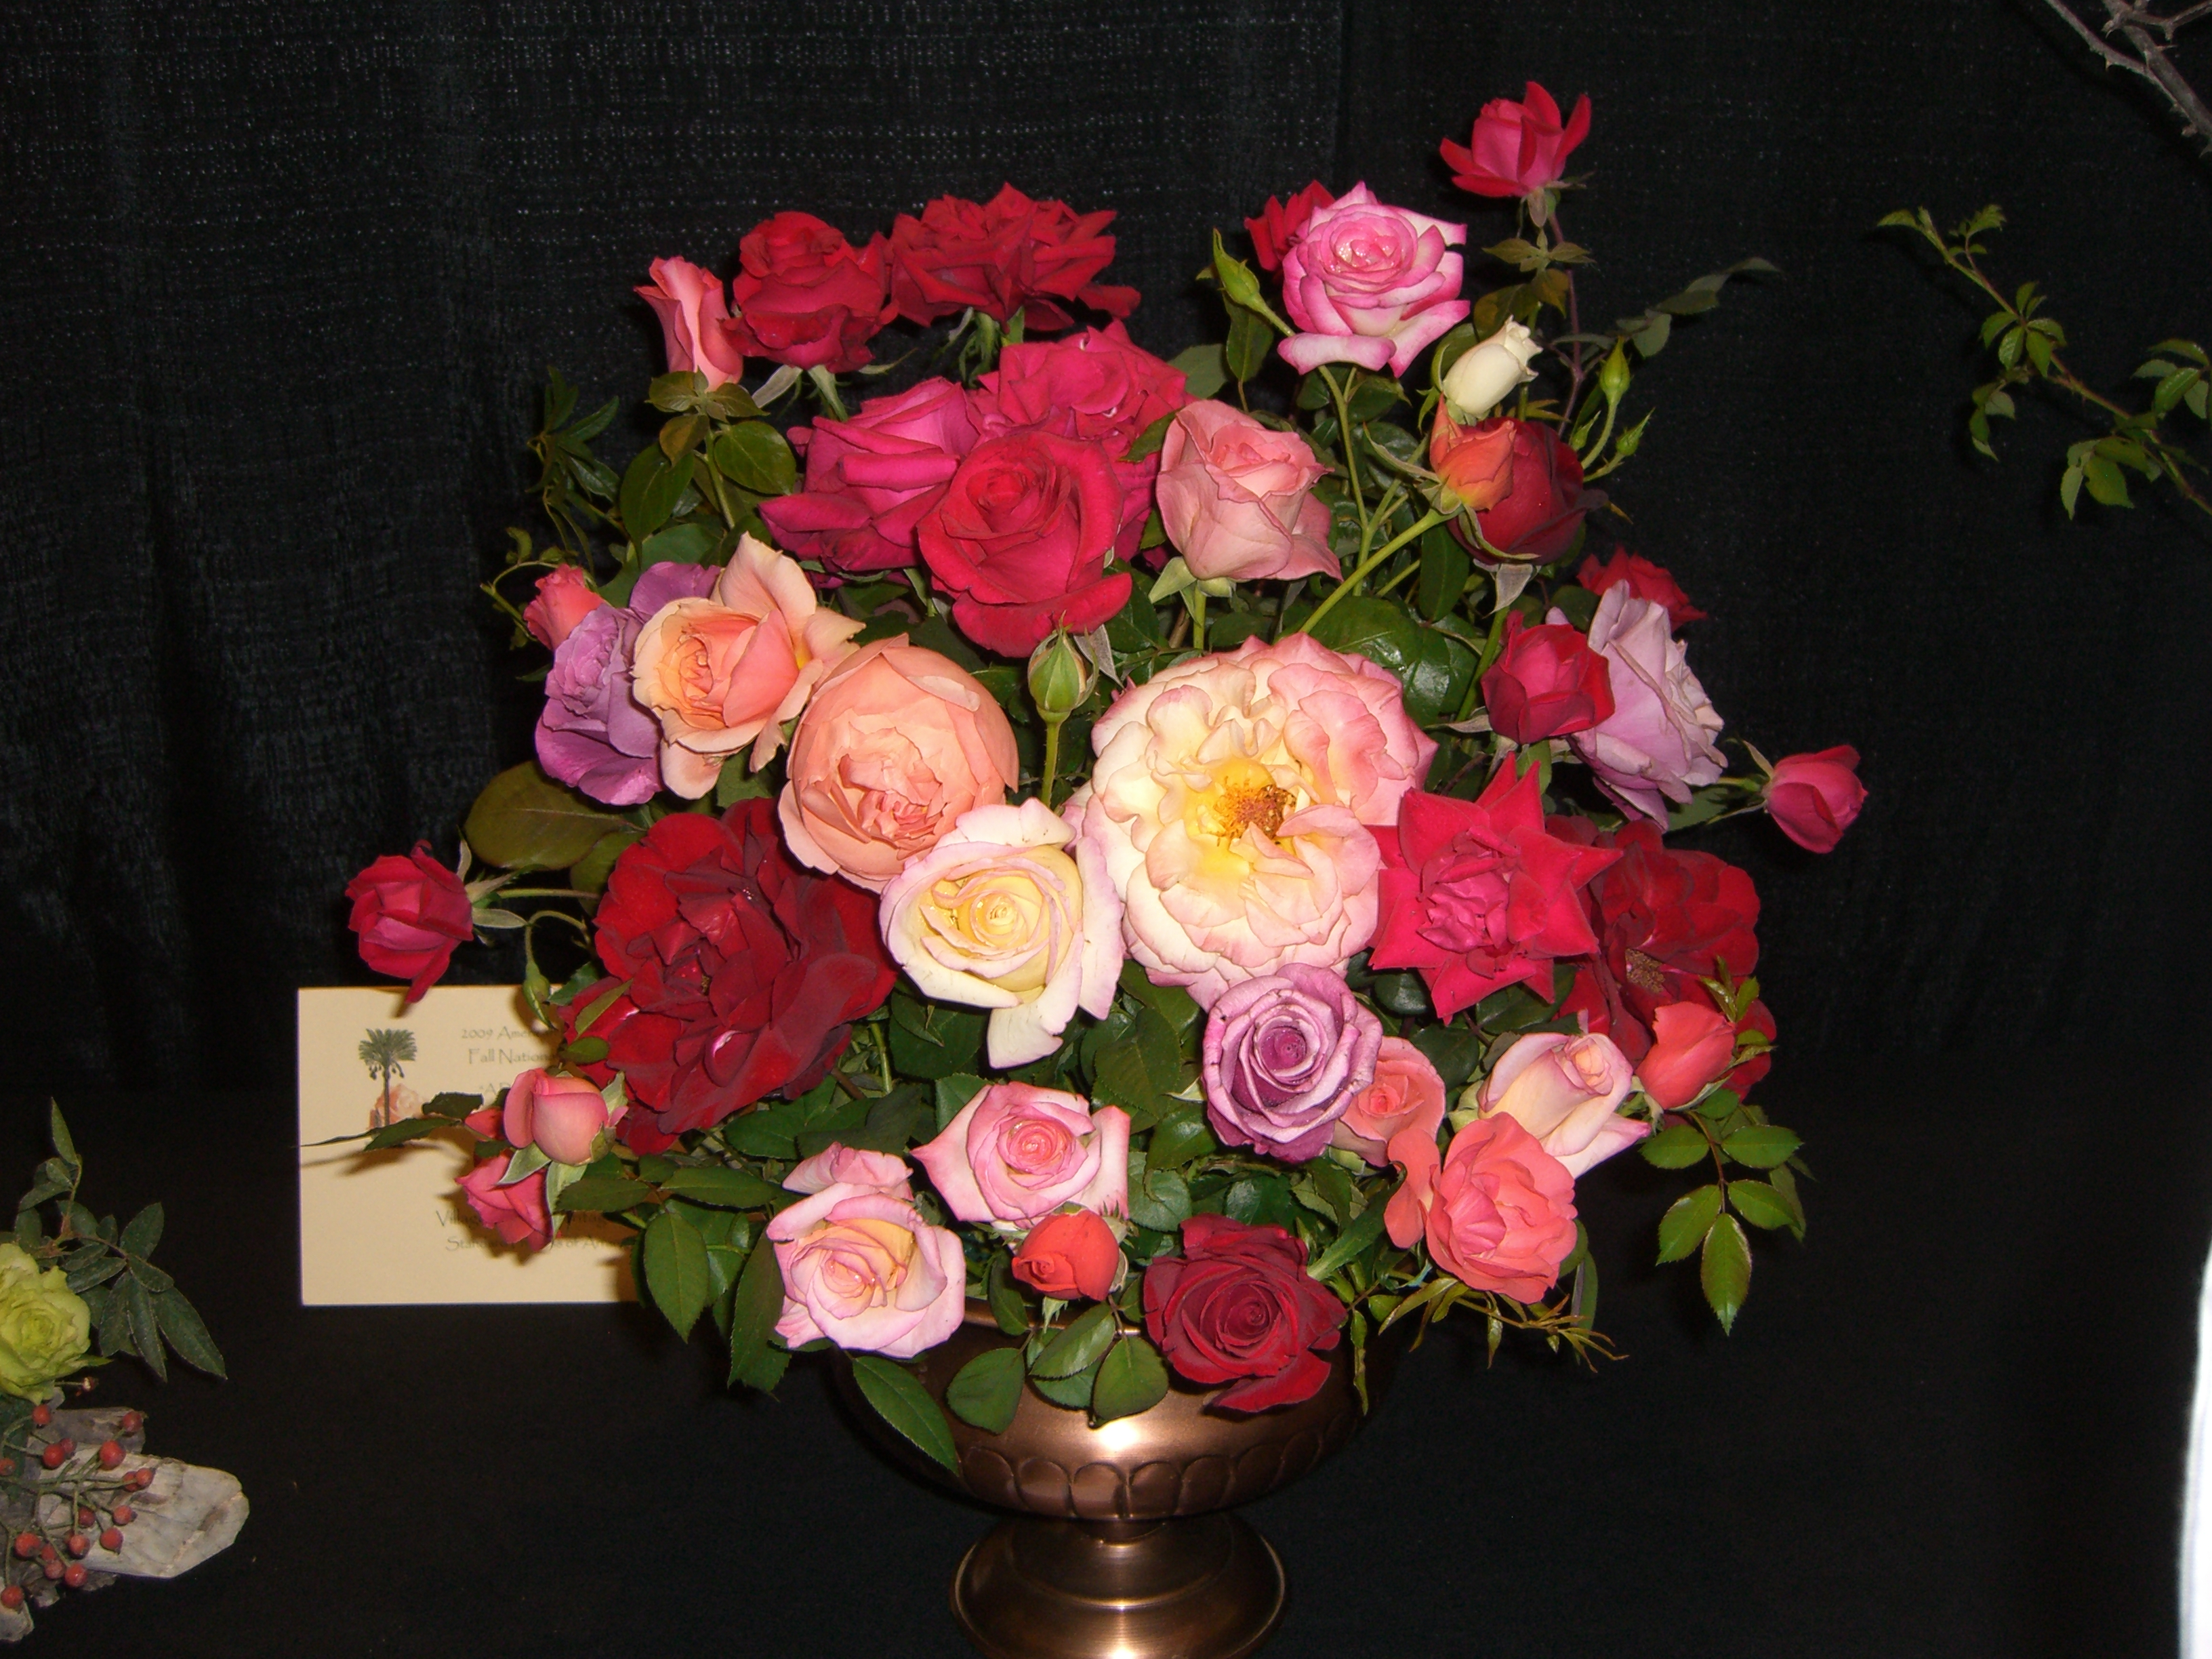 Условия для роз в вазе. Букет цветов. Букет цветов в вазе. Букет роз в вазе. Букет цветов на столе.